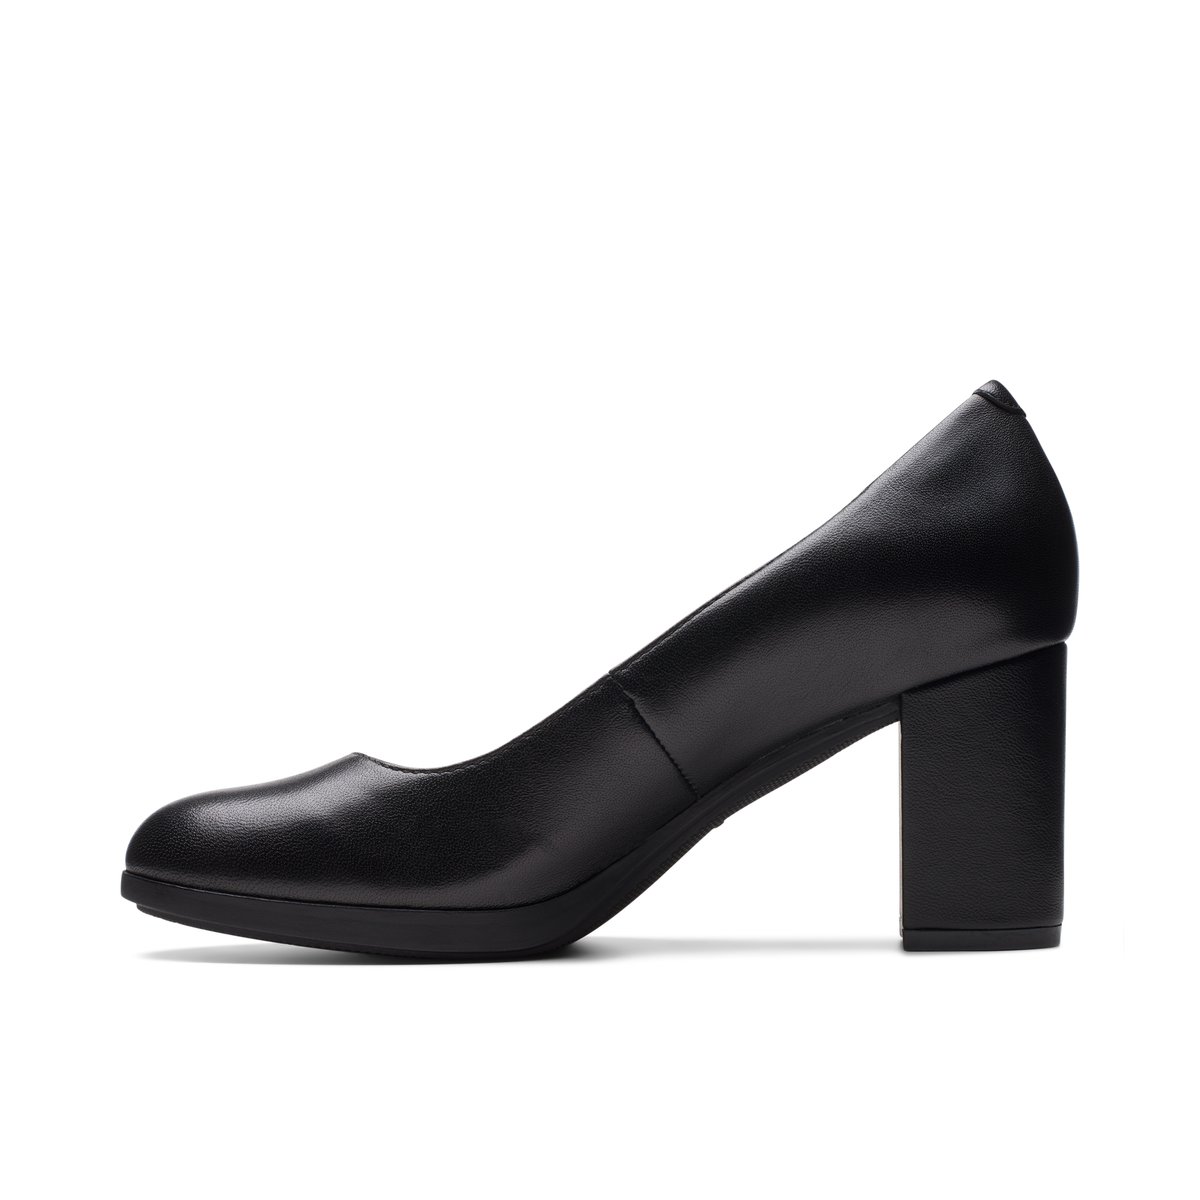 CLARKS - Women's Black Dress Shoes - Bayla_skip | Globo Canada